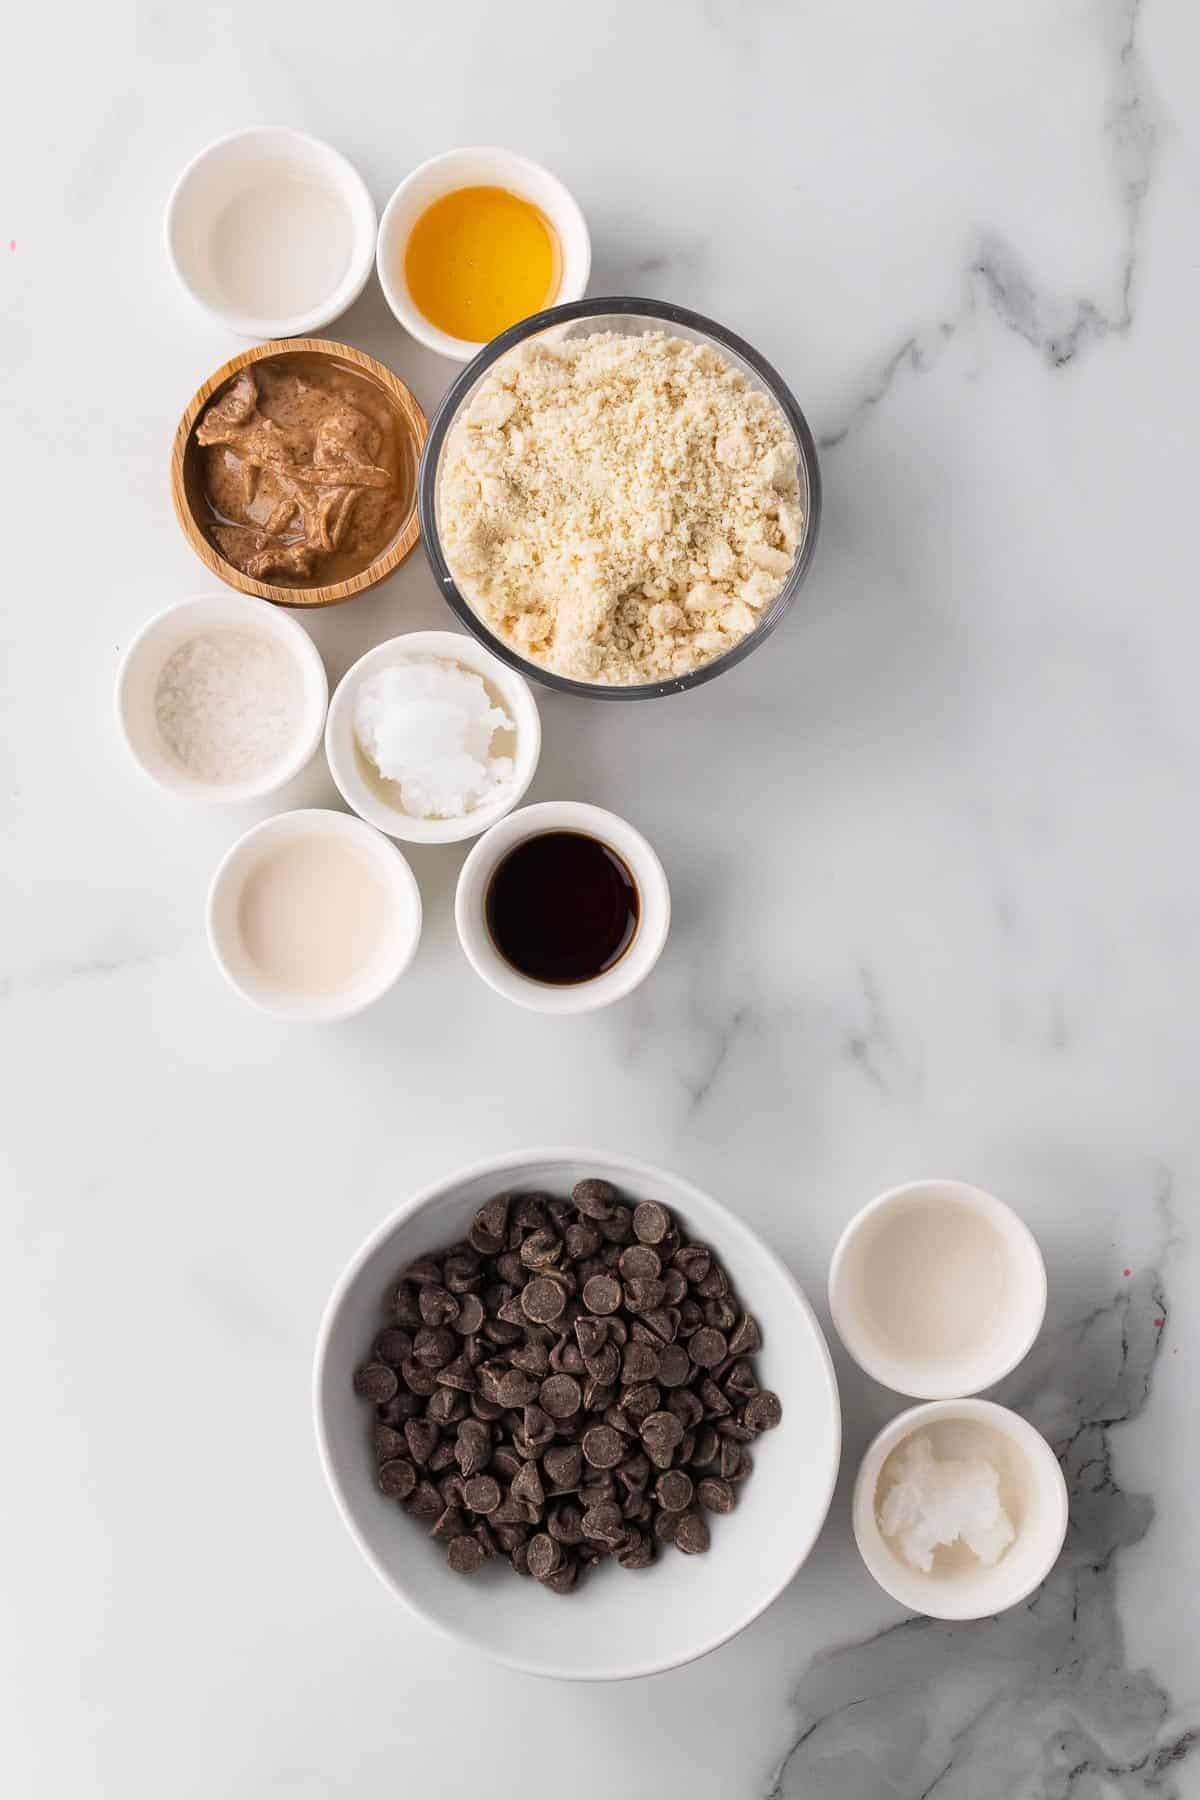 Ingredients for the truffles in individual ramekins